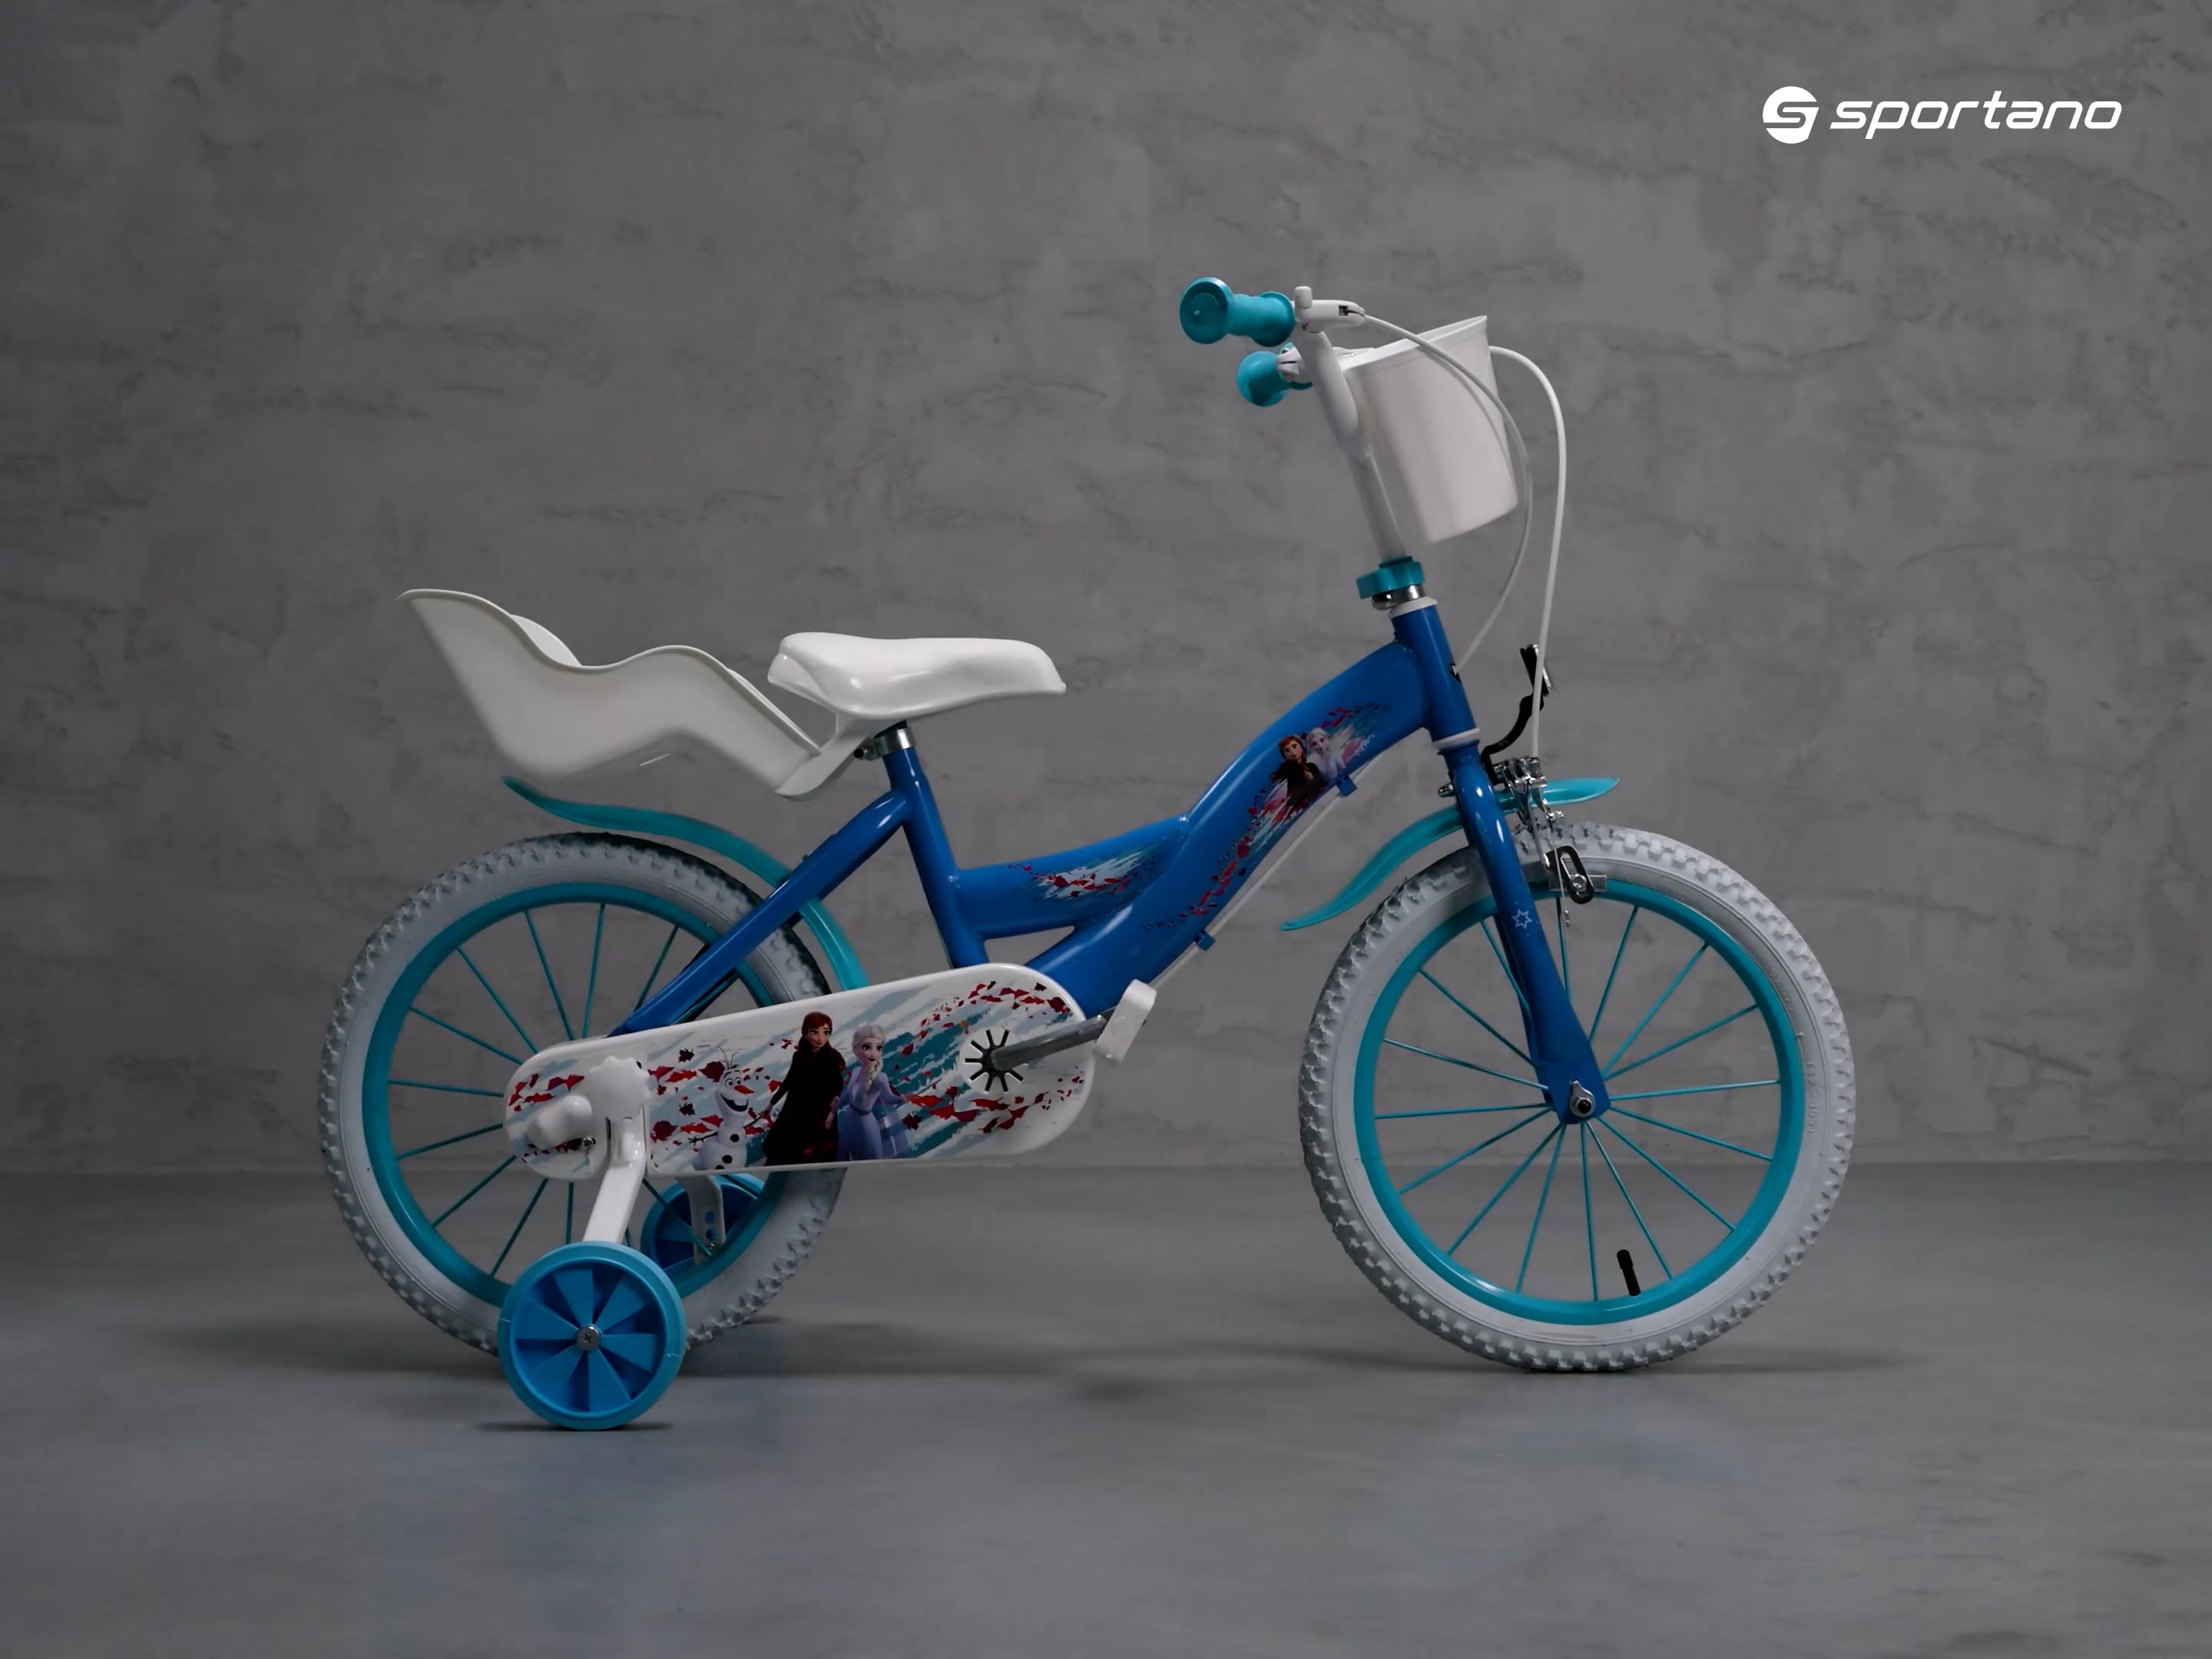 Bicicleta pentru copii Huffy Frozen albastru 21871W